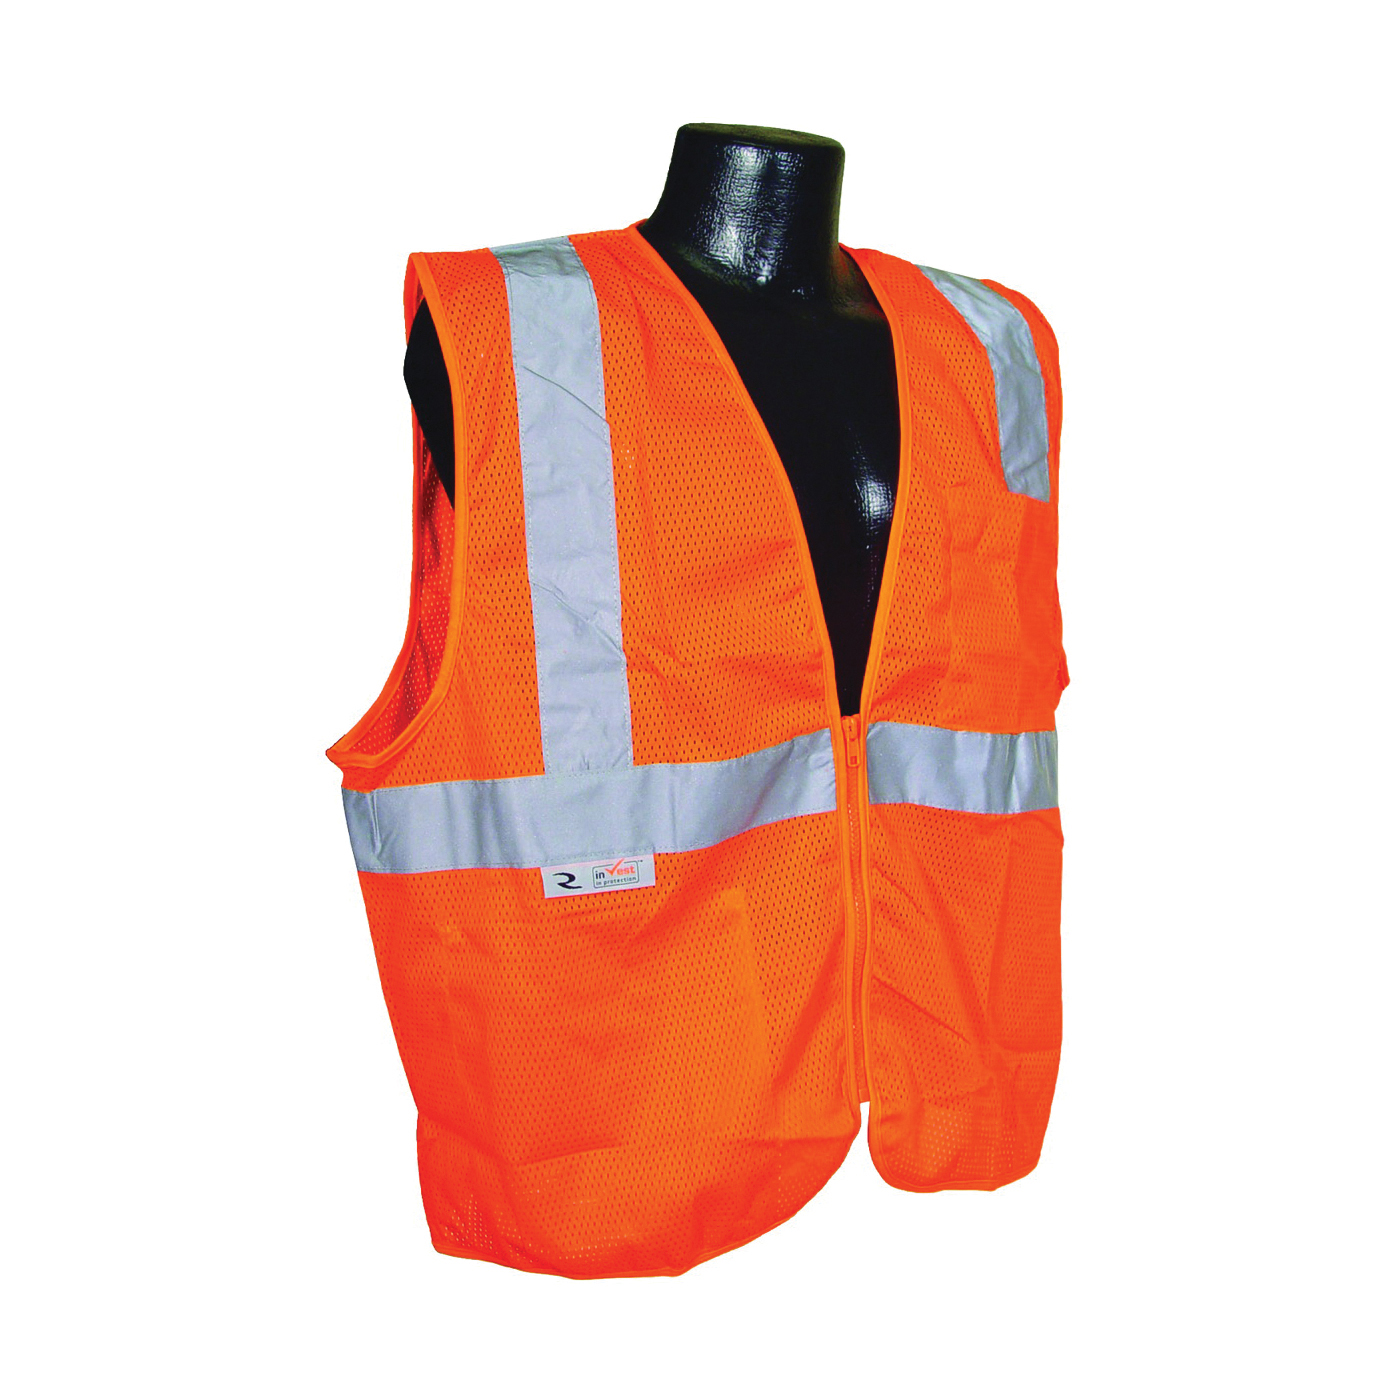 SV2ZOM-L Economical Safety Vest, L, Unisex, Fits to Chest Size: 26 in, Polyester, Orange/Silver, Zipper Closure